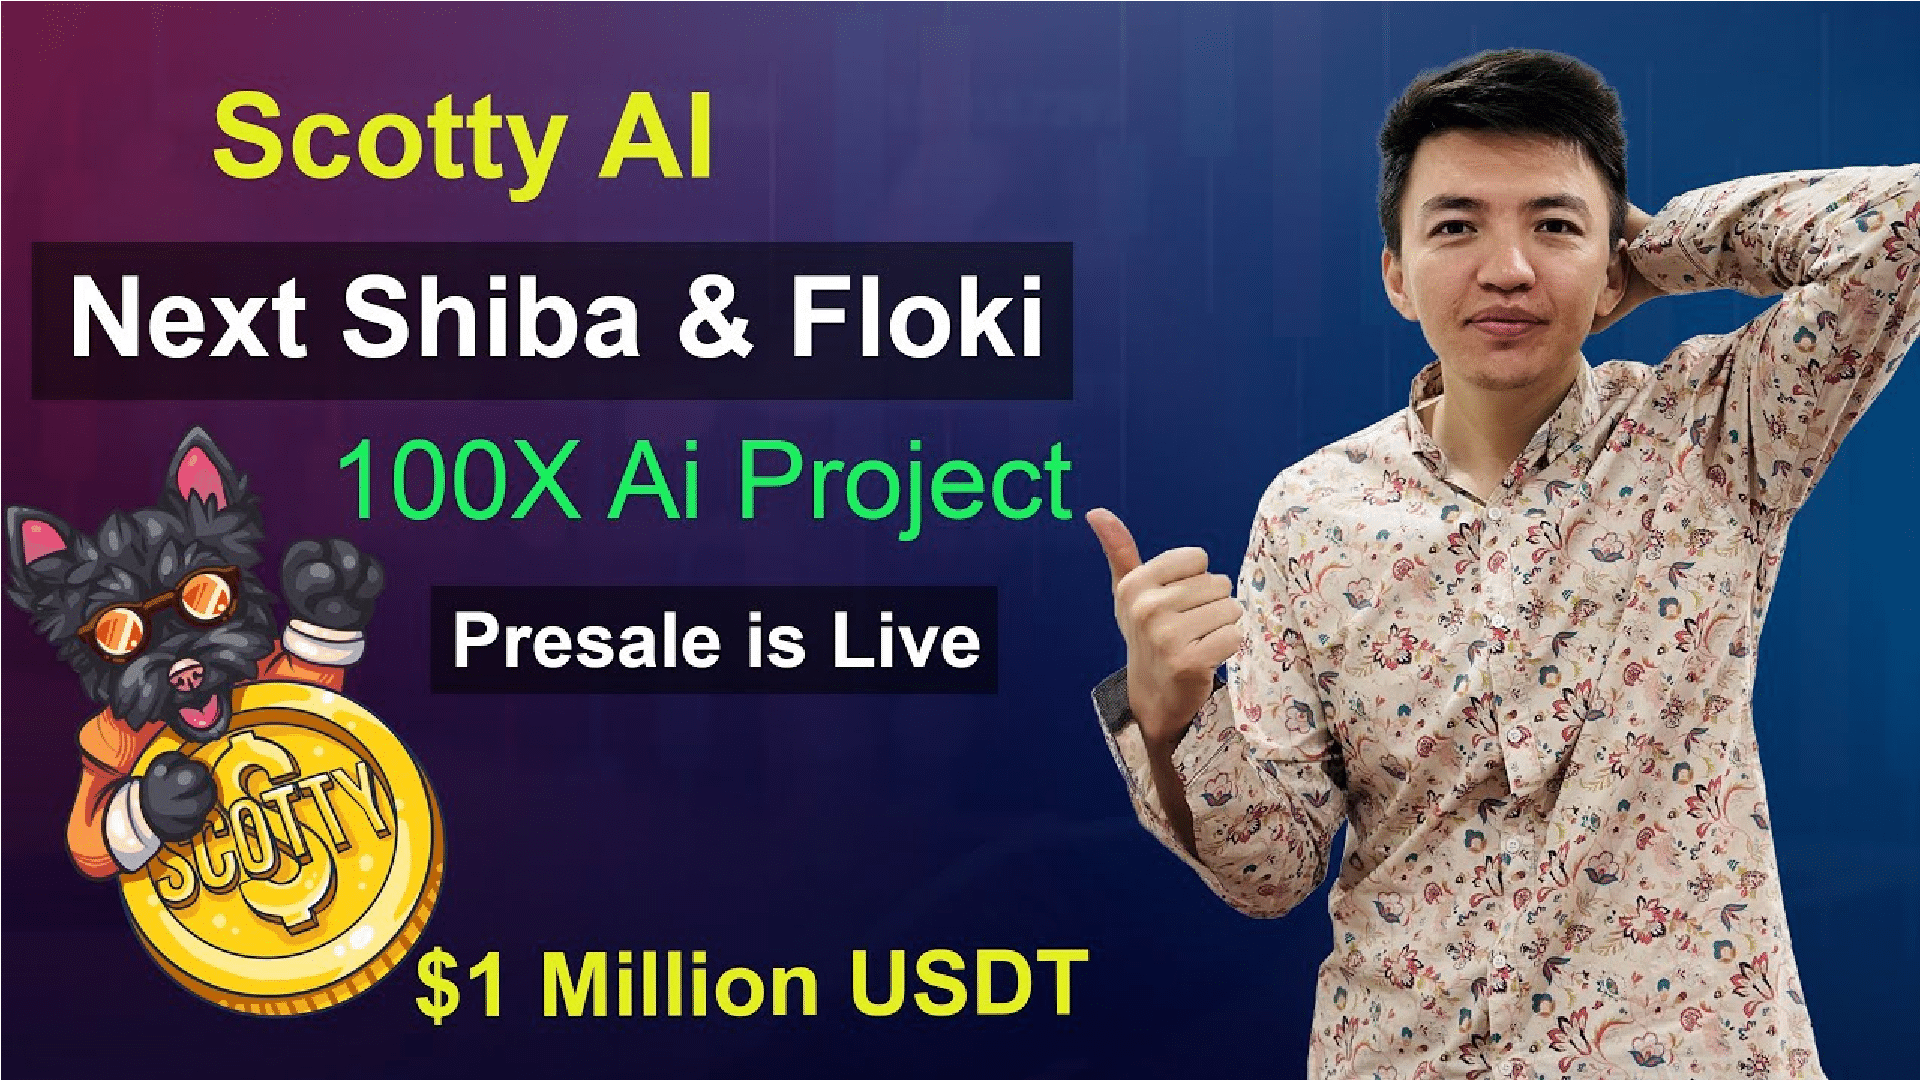 Crypto Boy Reviews the New 100x AI Project ICO - The Next Shiba Inu?